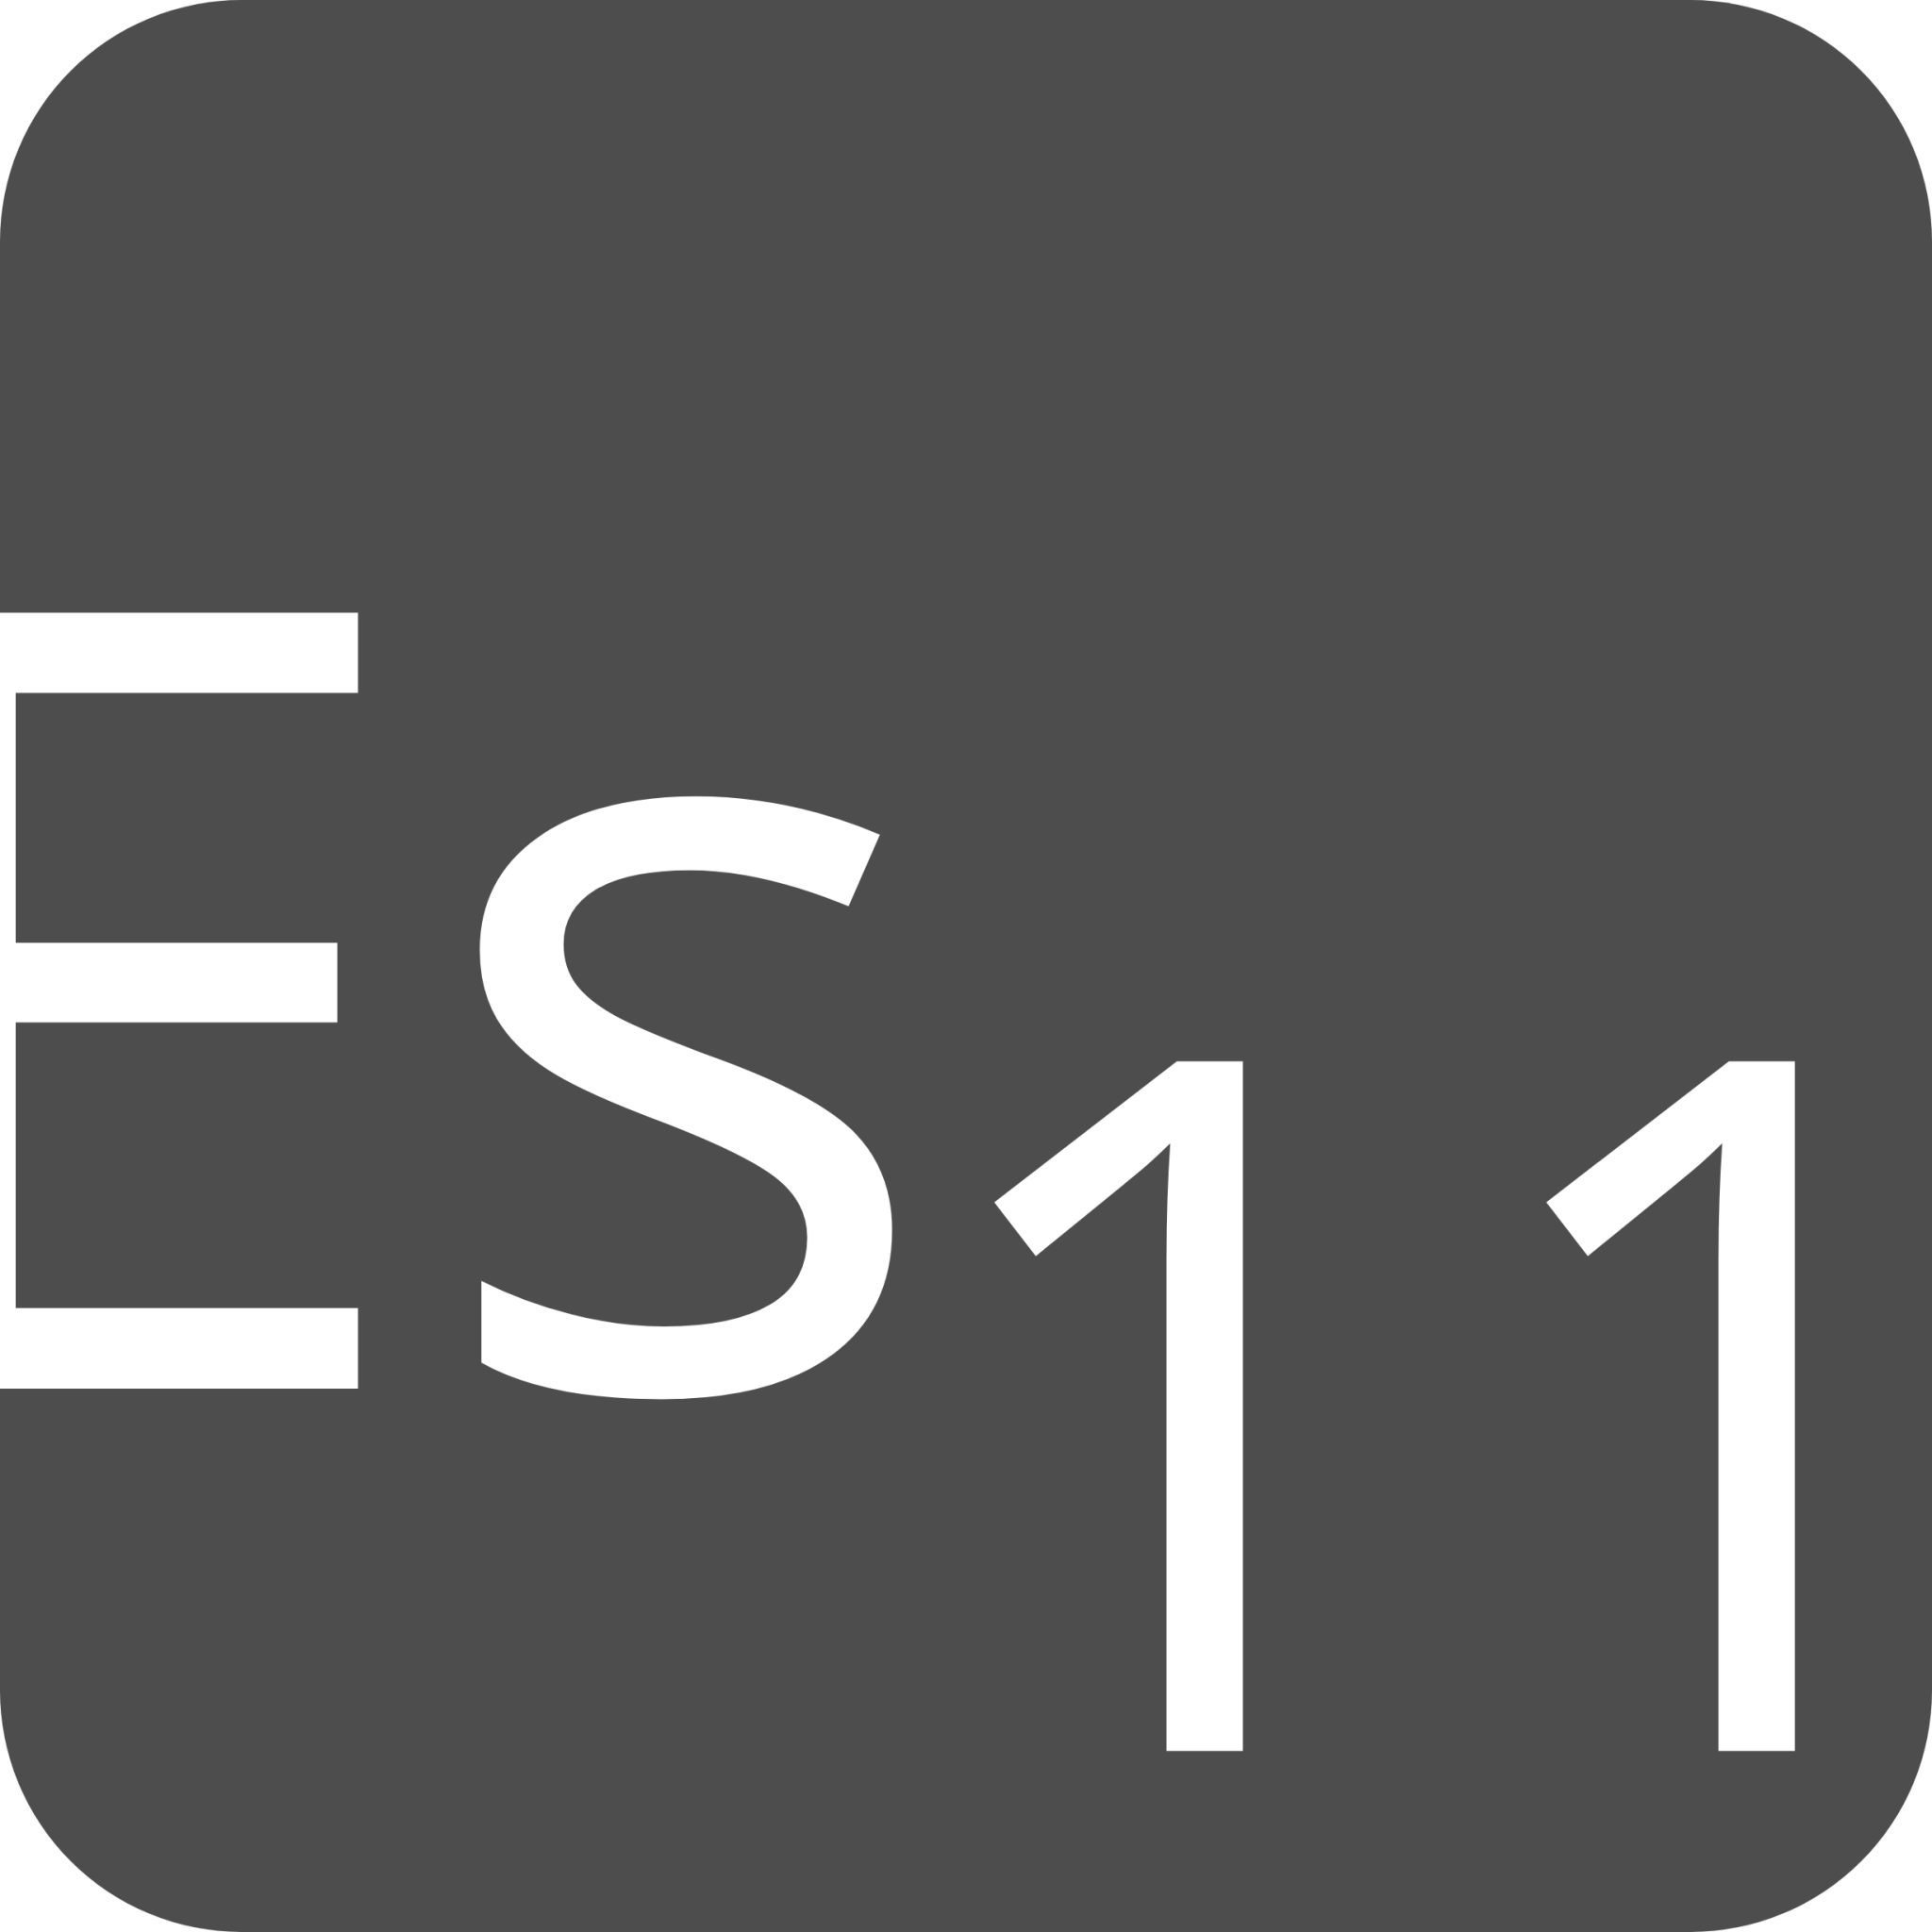 indicator keyboard Es icon